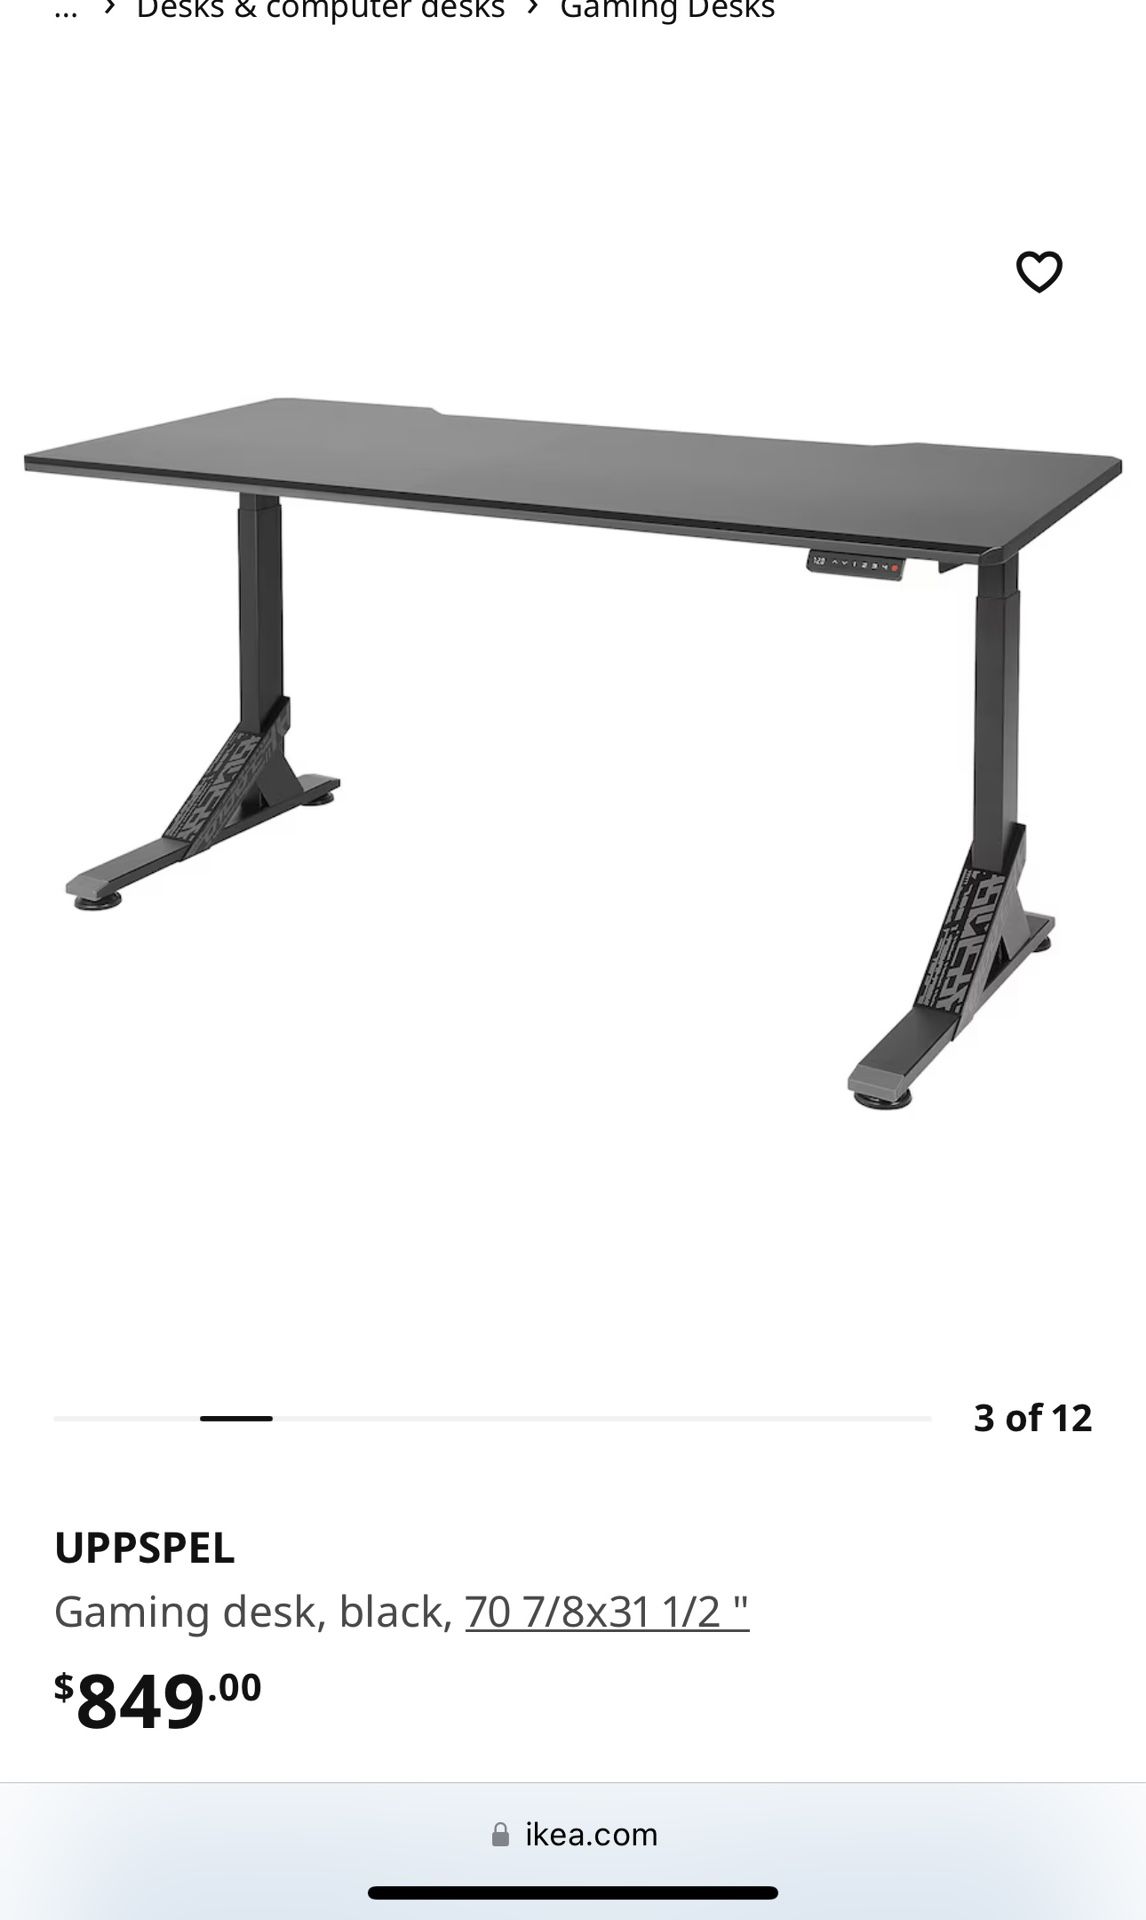 IKEA Uppspel Gaming Desk New In Box GREAT DEAL 